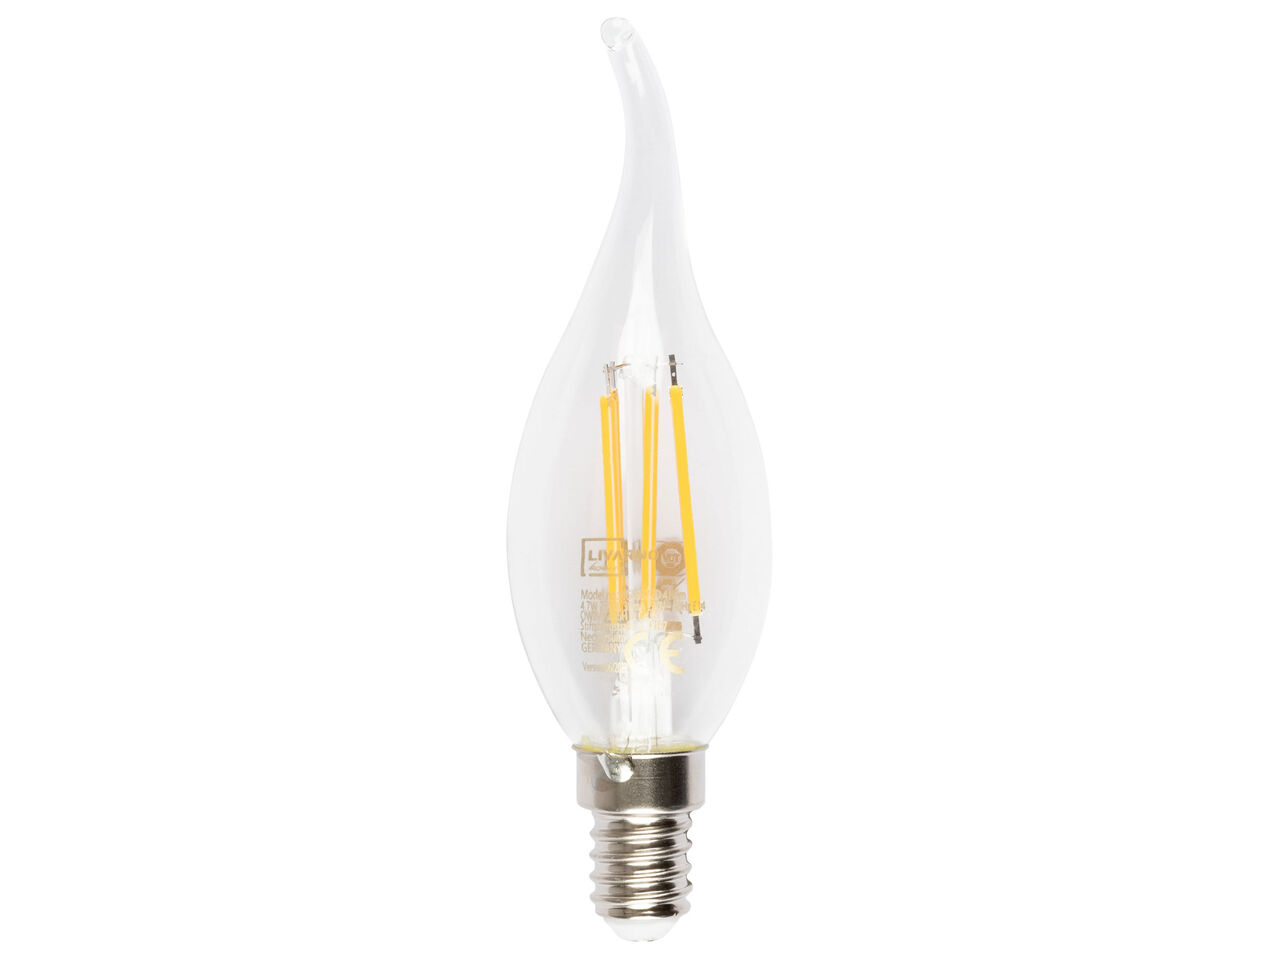 LIVARNO HOME® Żarówka filamentowa LED , cena 7,99 PLN 
LIVARNO HOME® Żarówka ...